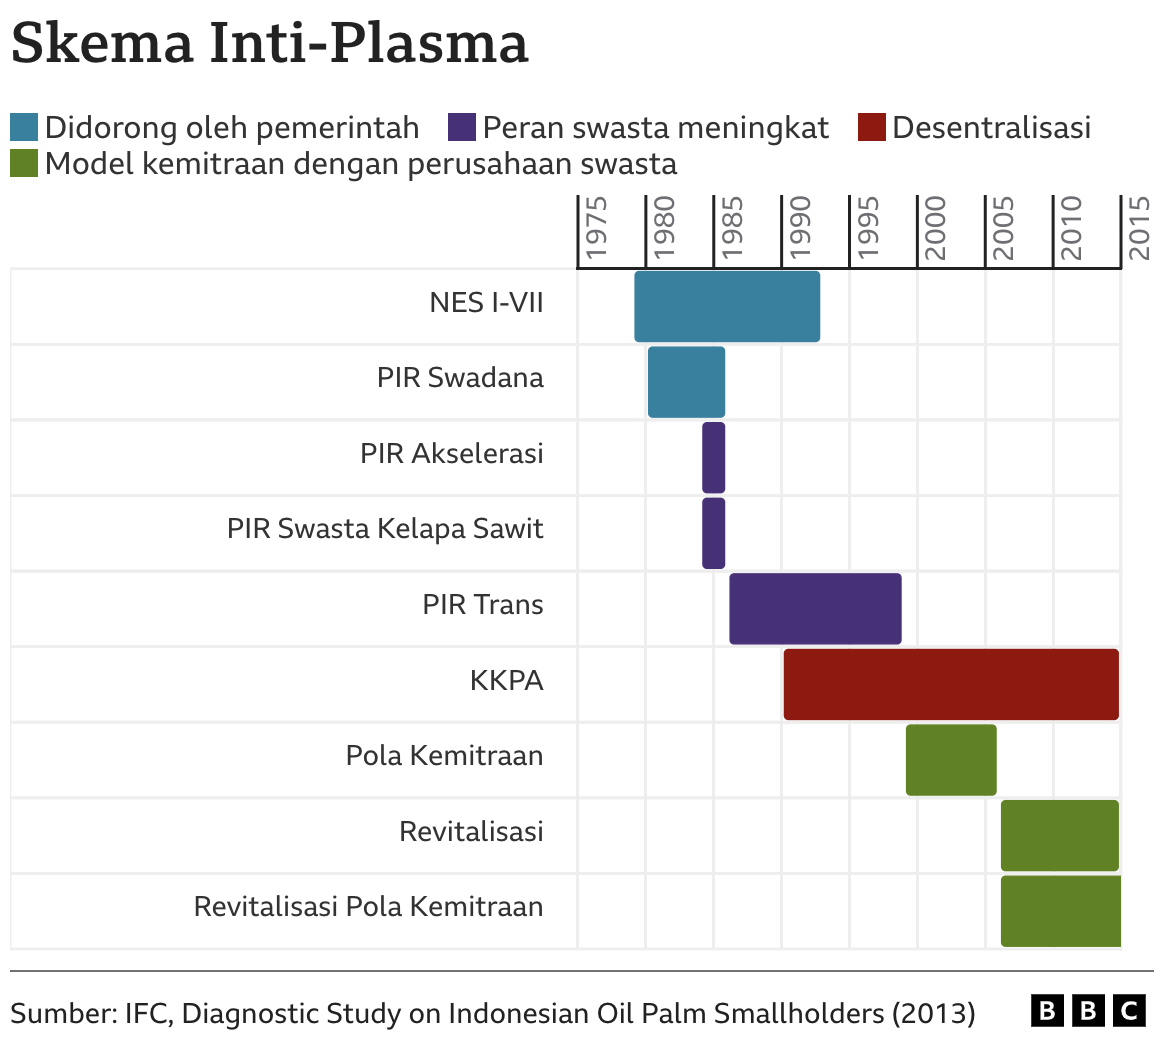 Pola kerja sama inti-plasma di Indonesia